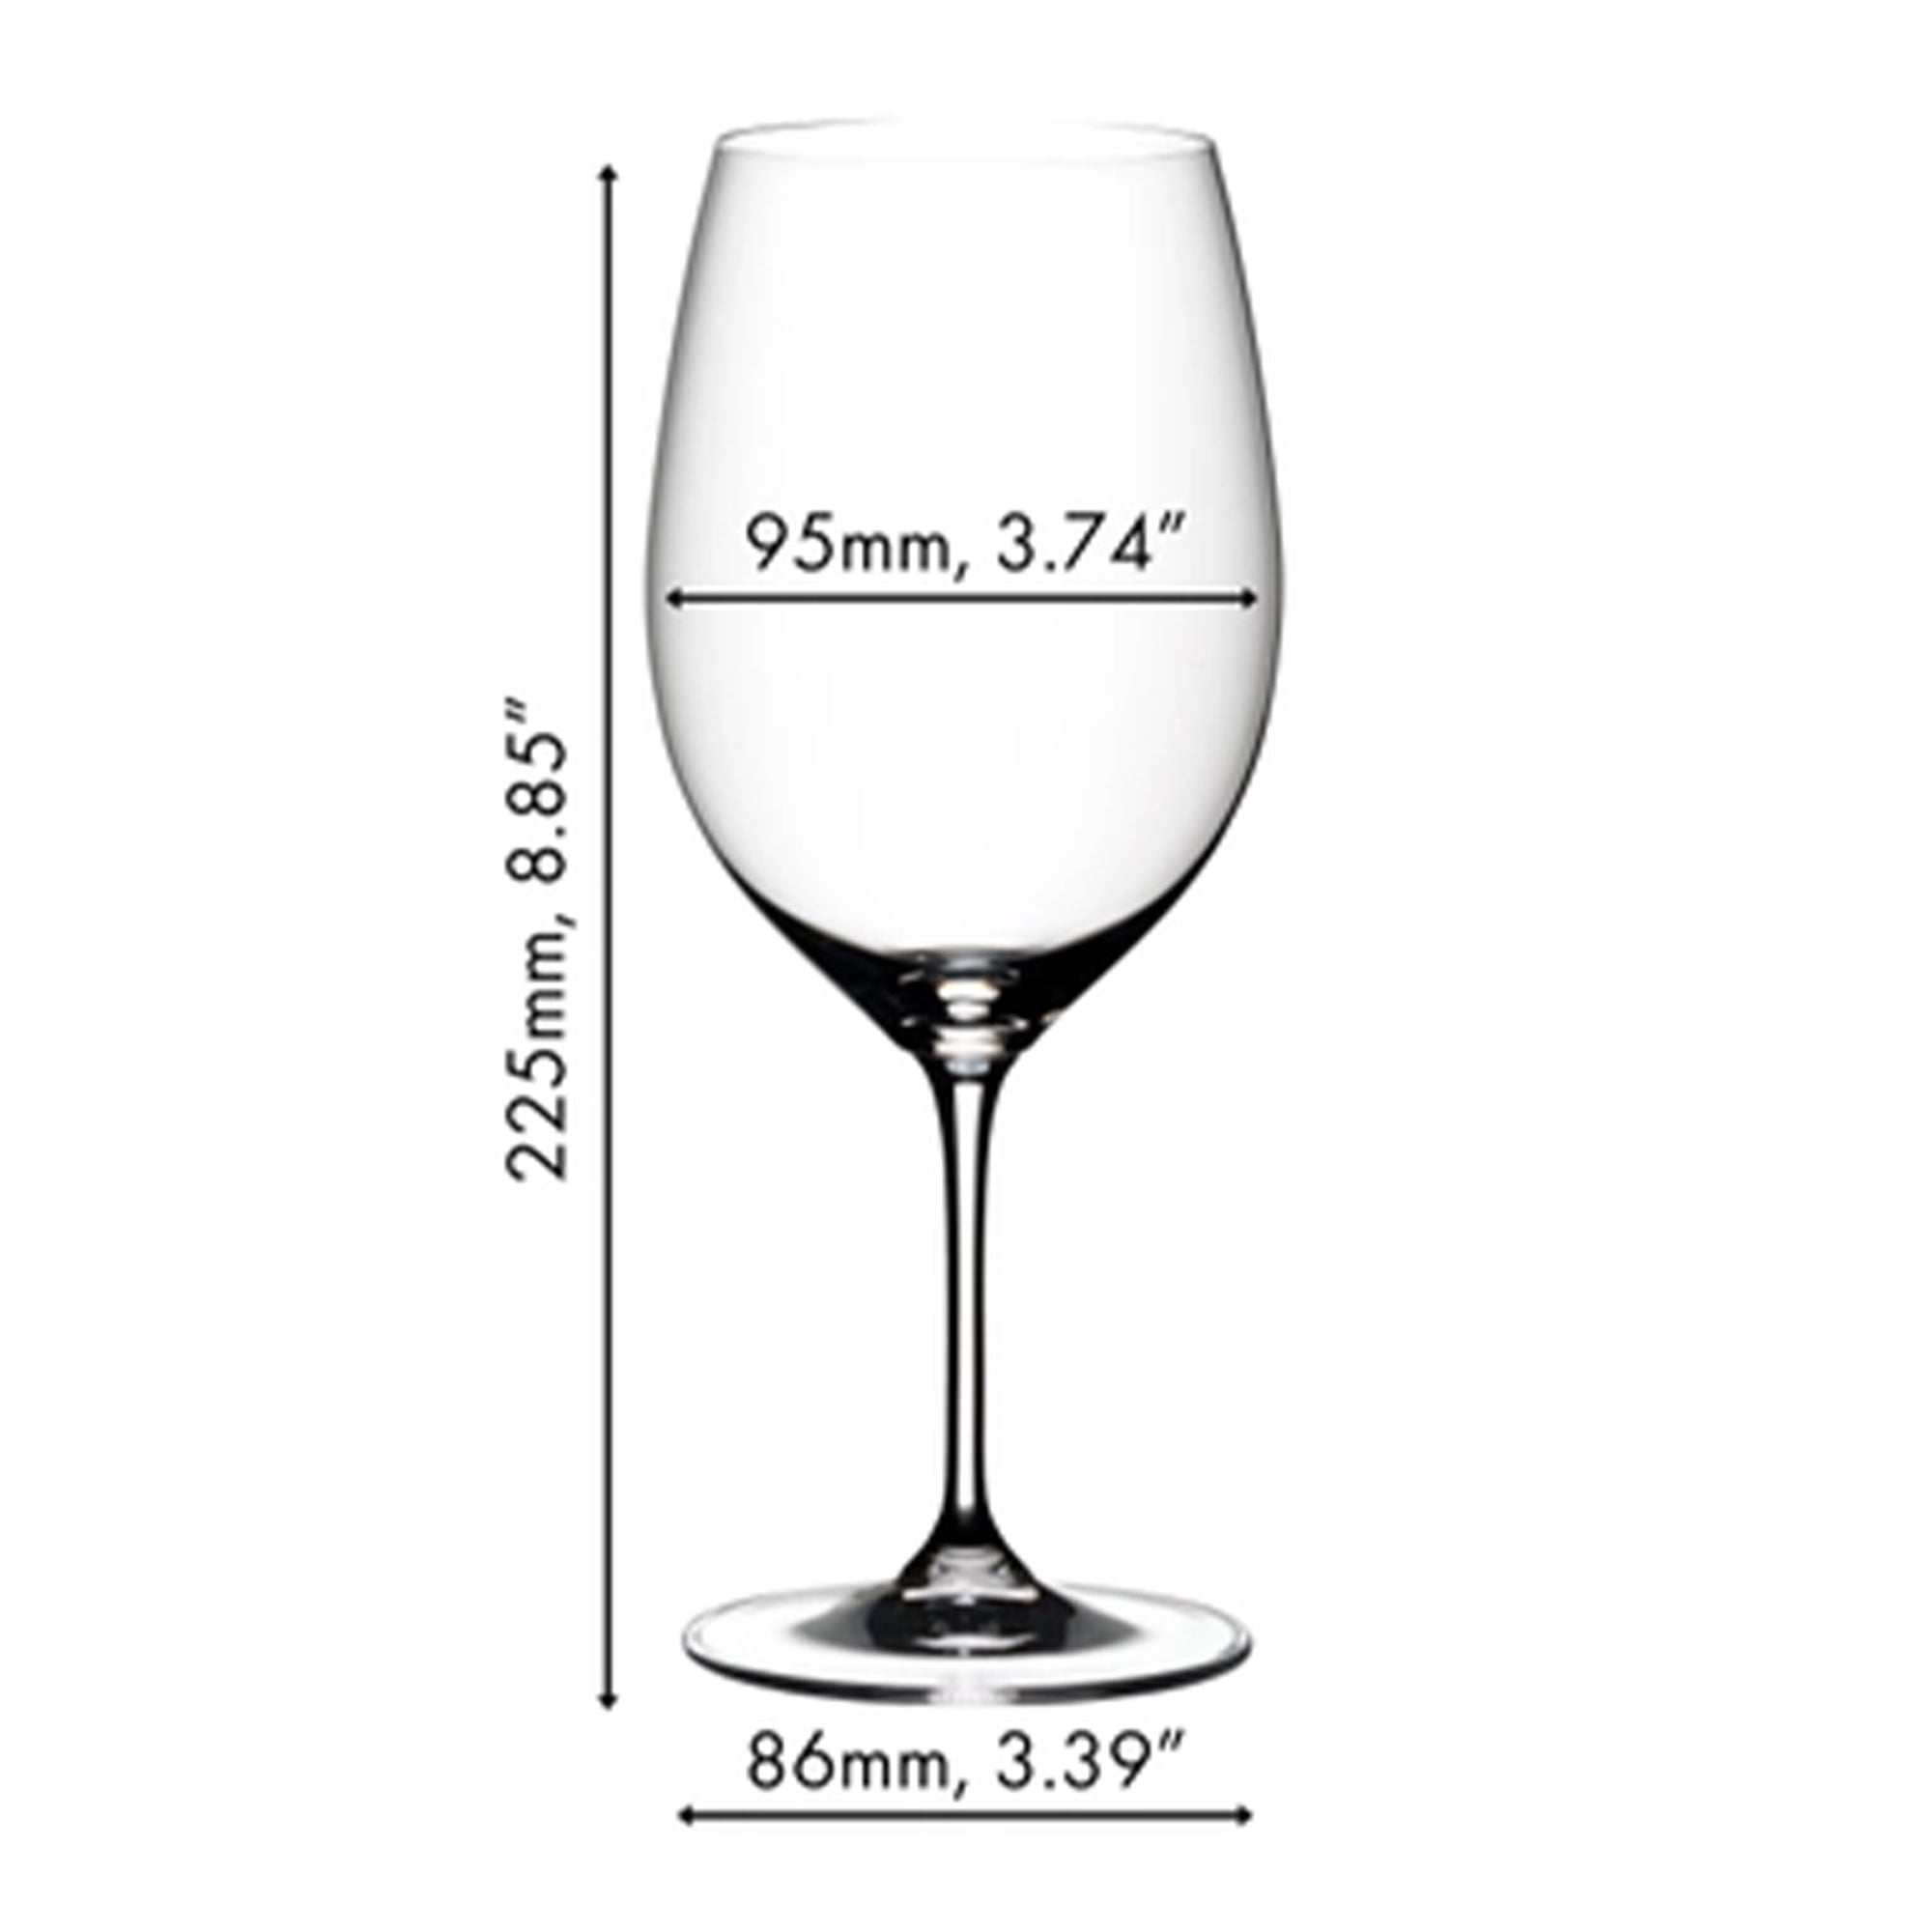 Riedel Vinum Crystal Brandy Glass (Set of 4) - Dishwasher Safe, Premium Machine-made Cocktail Glasses